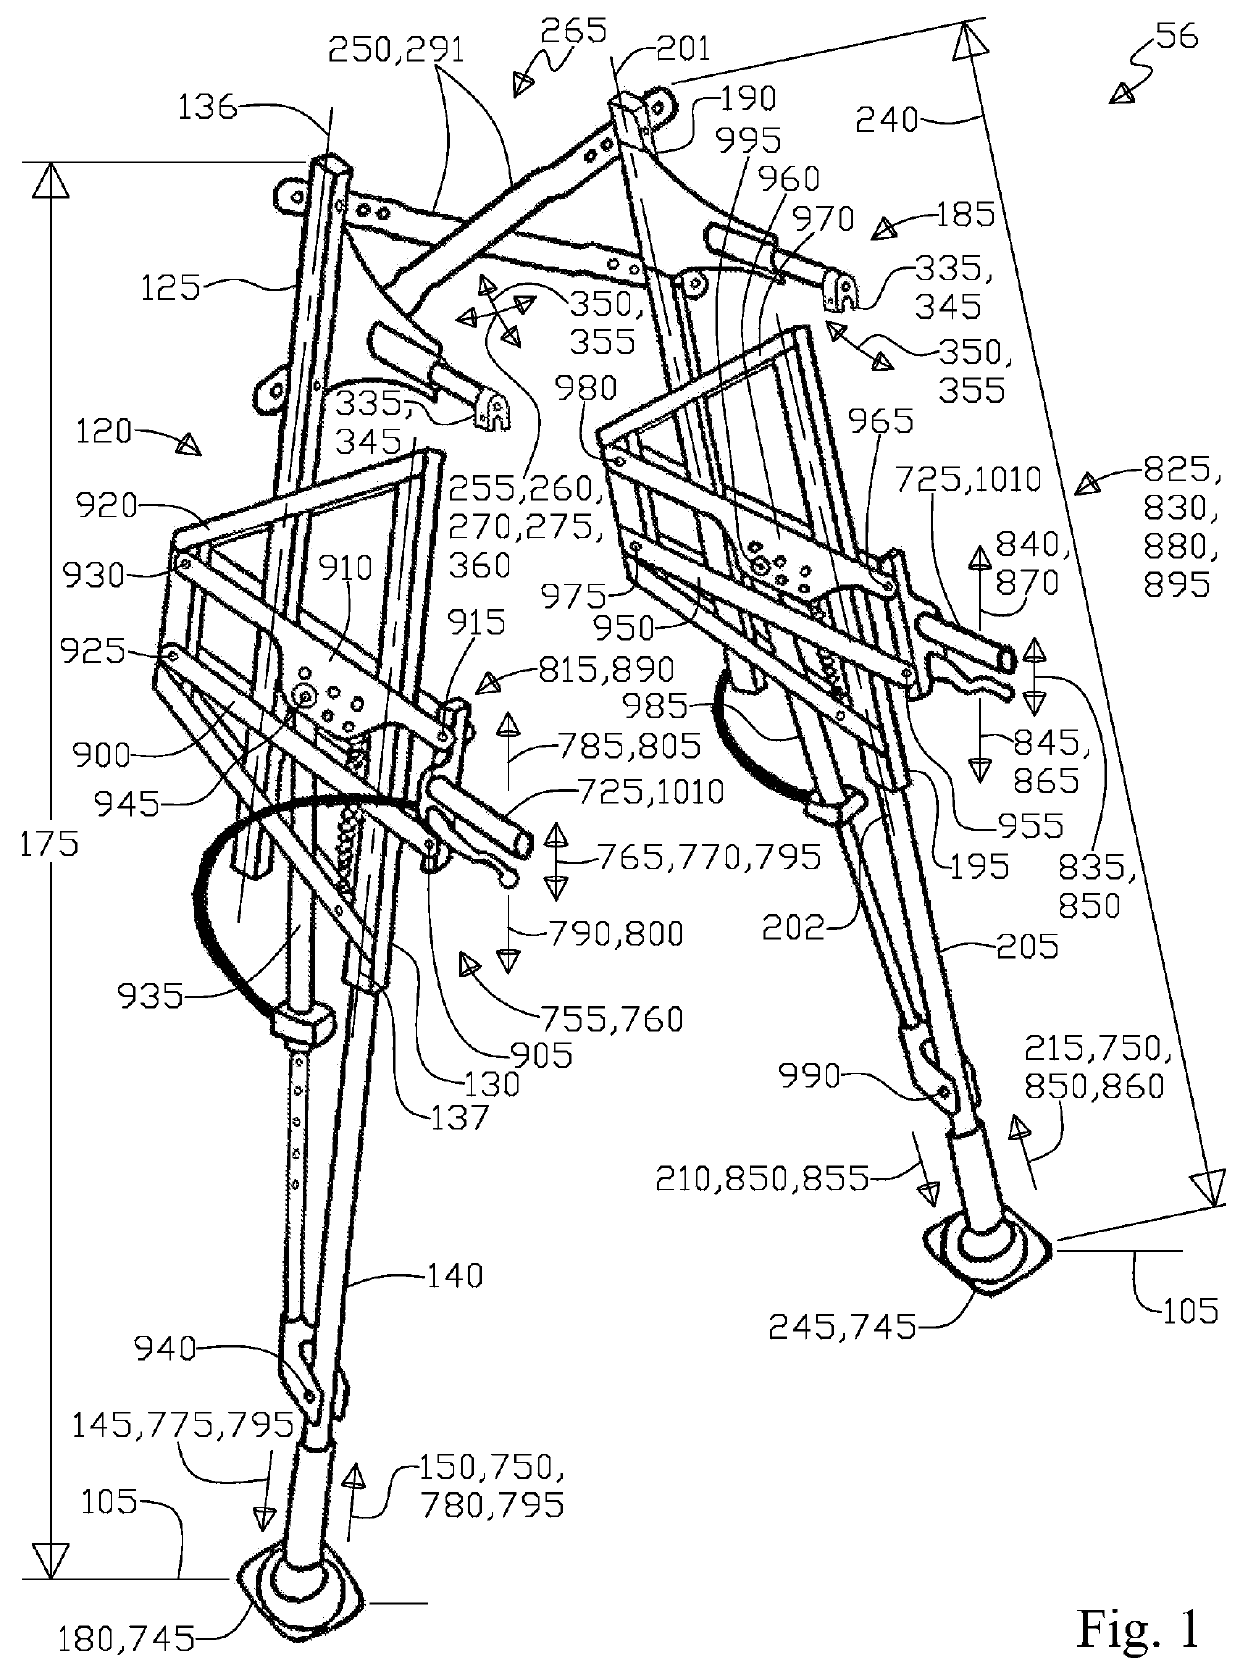 External structural brace apparatus